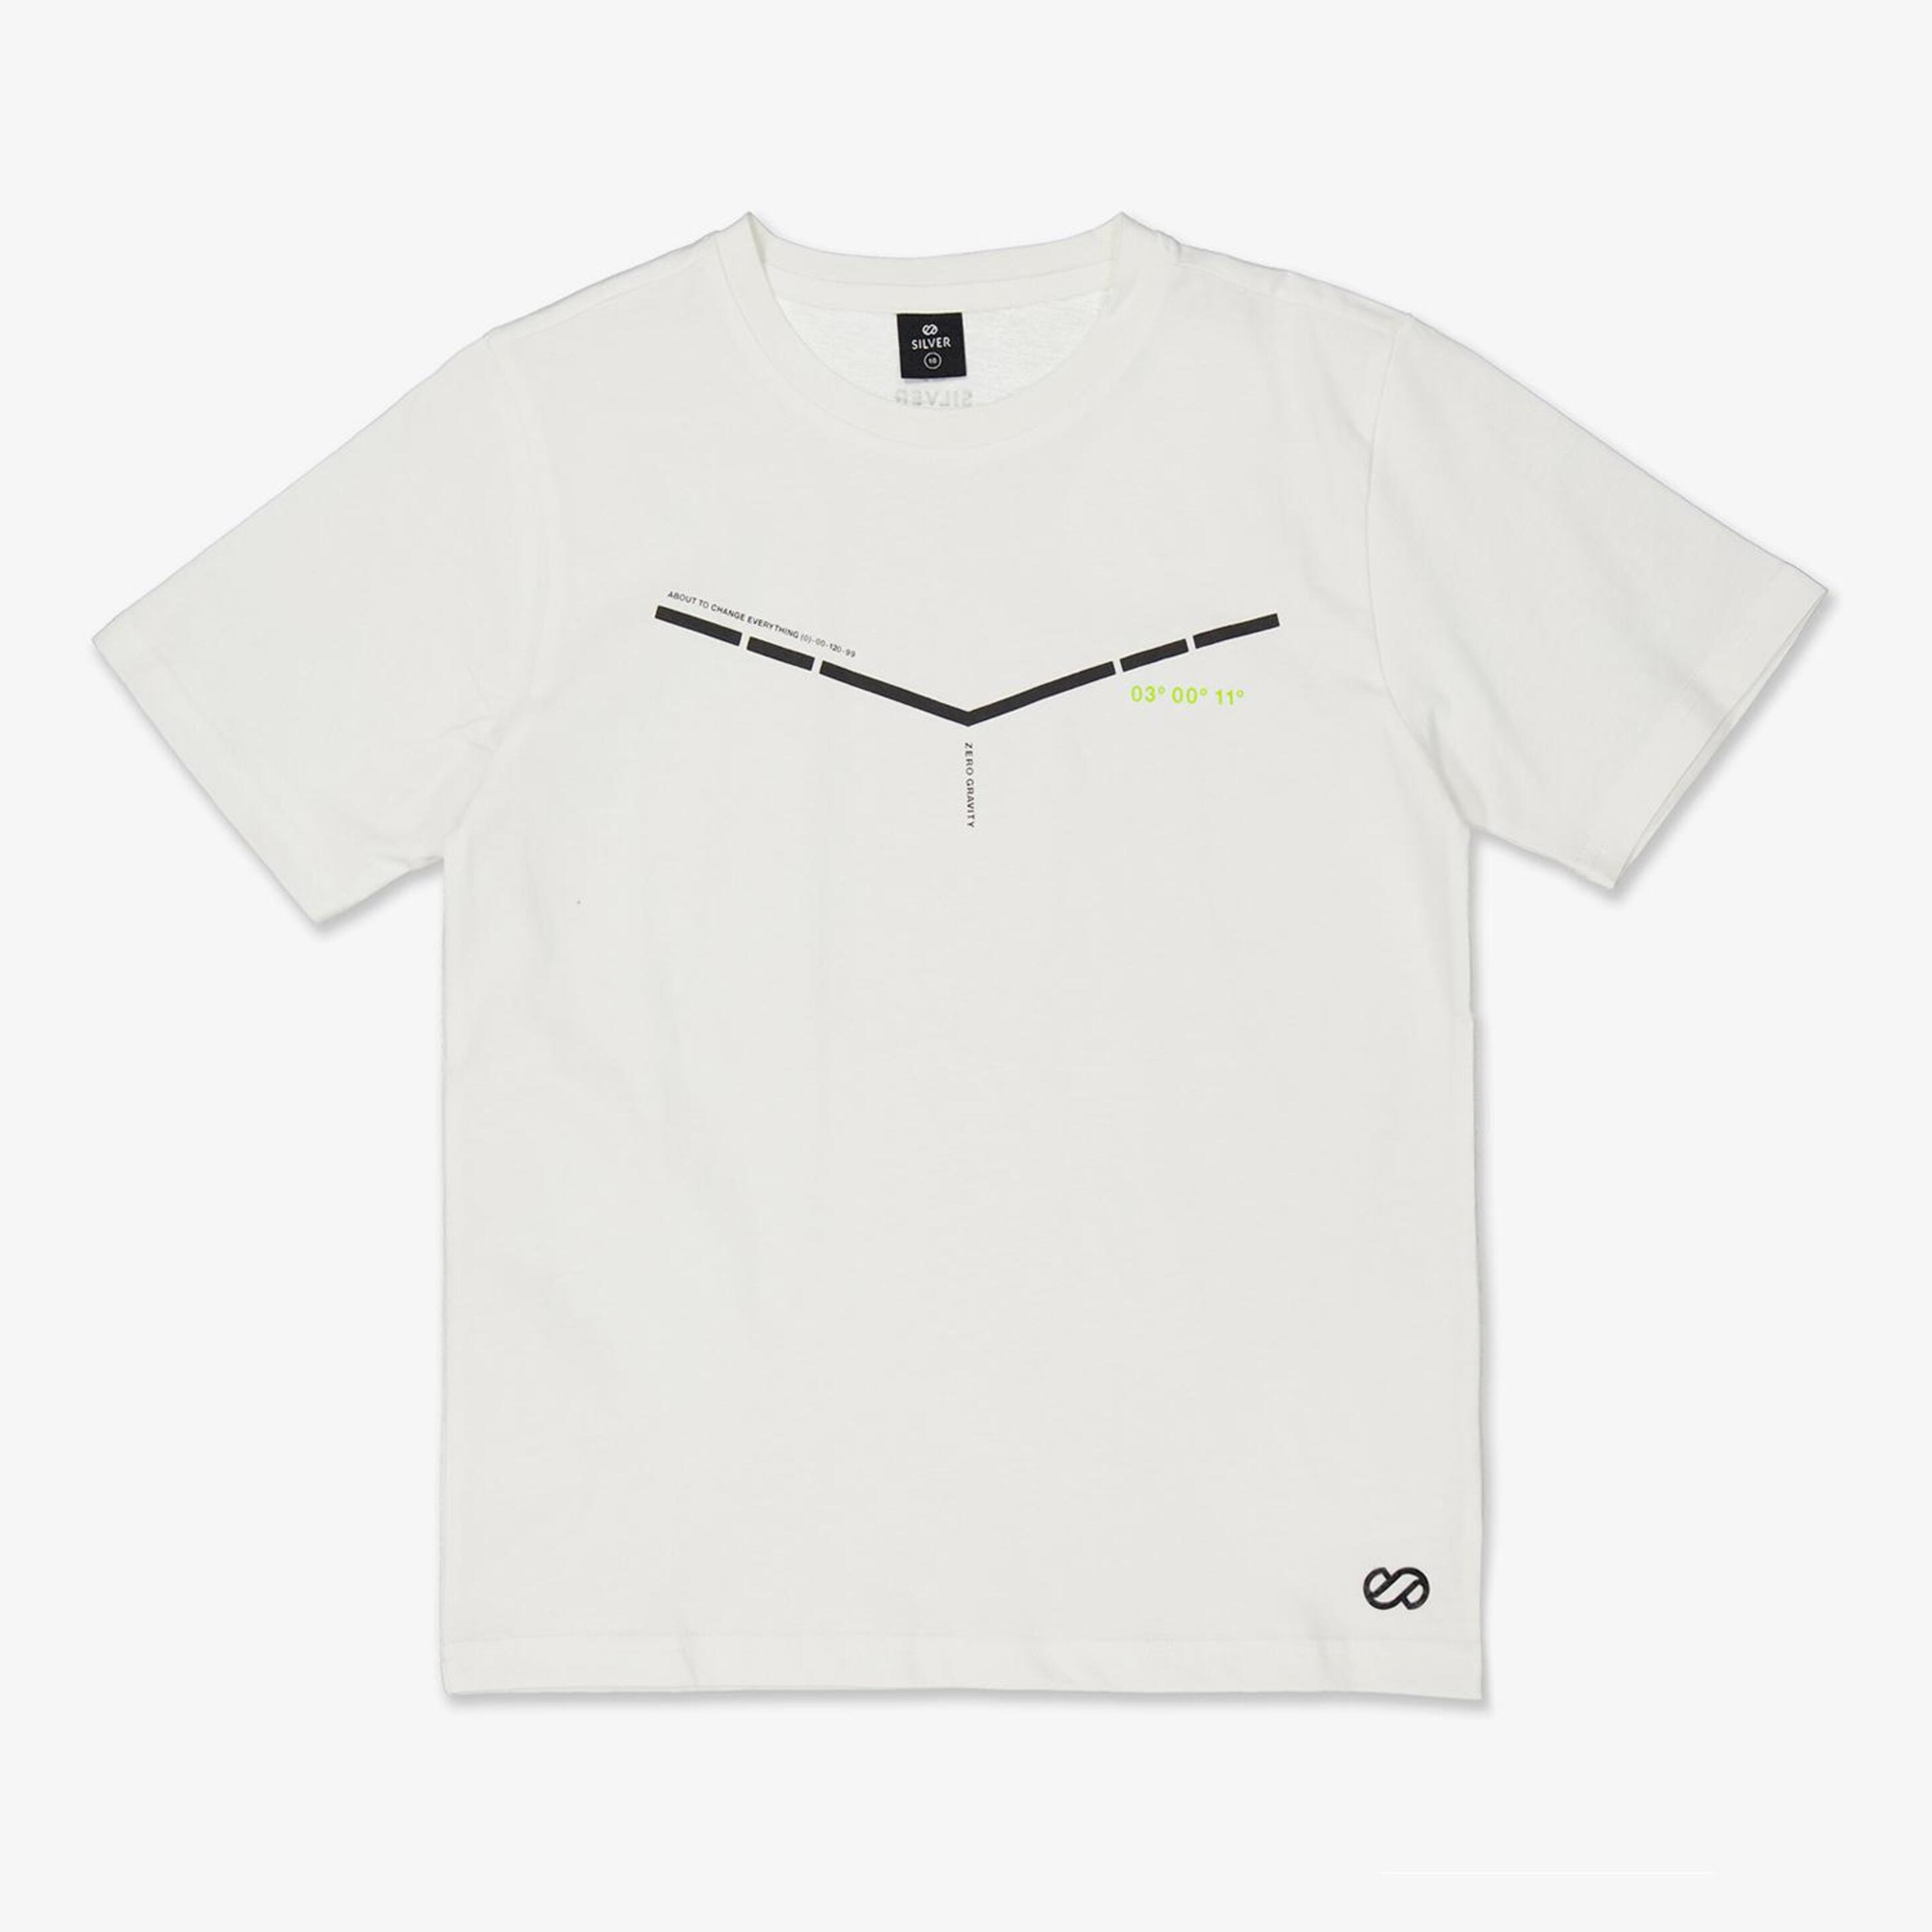 Silver Unlimited - blanco - T-shirt Rapaz